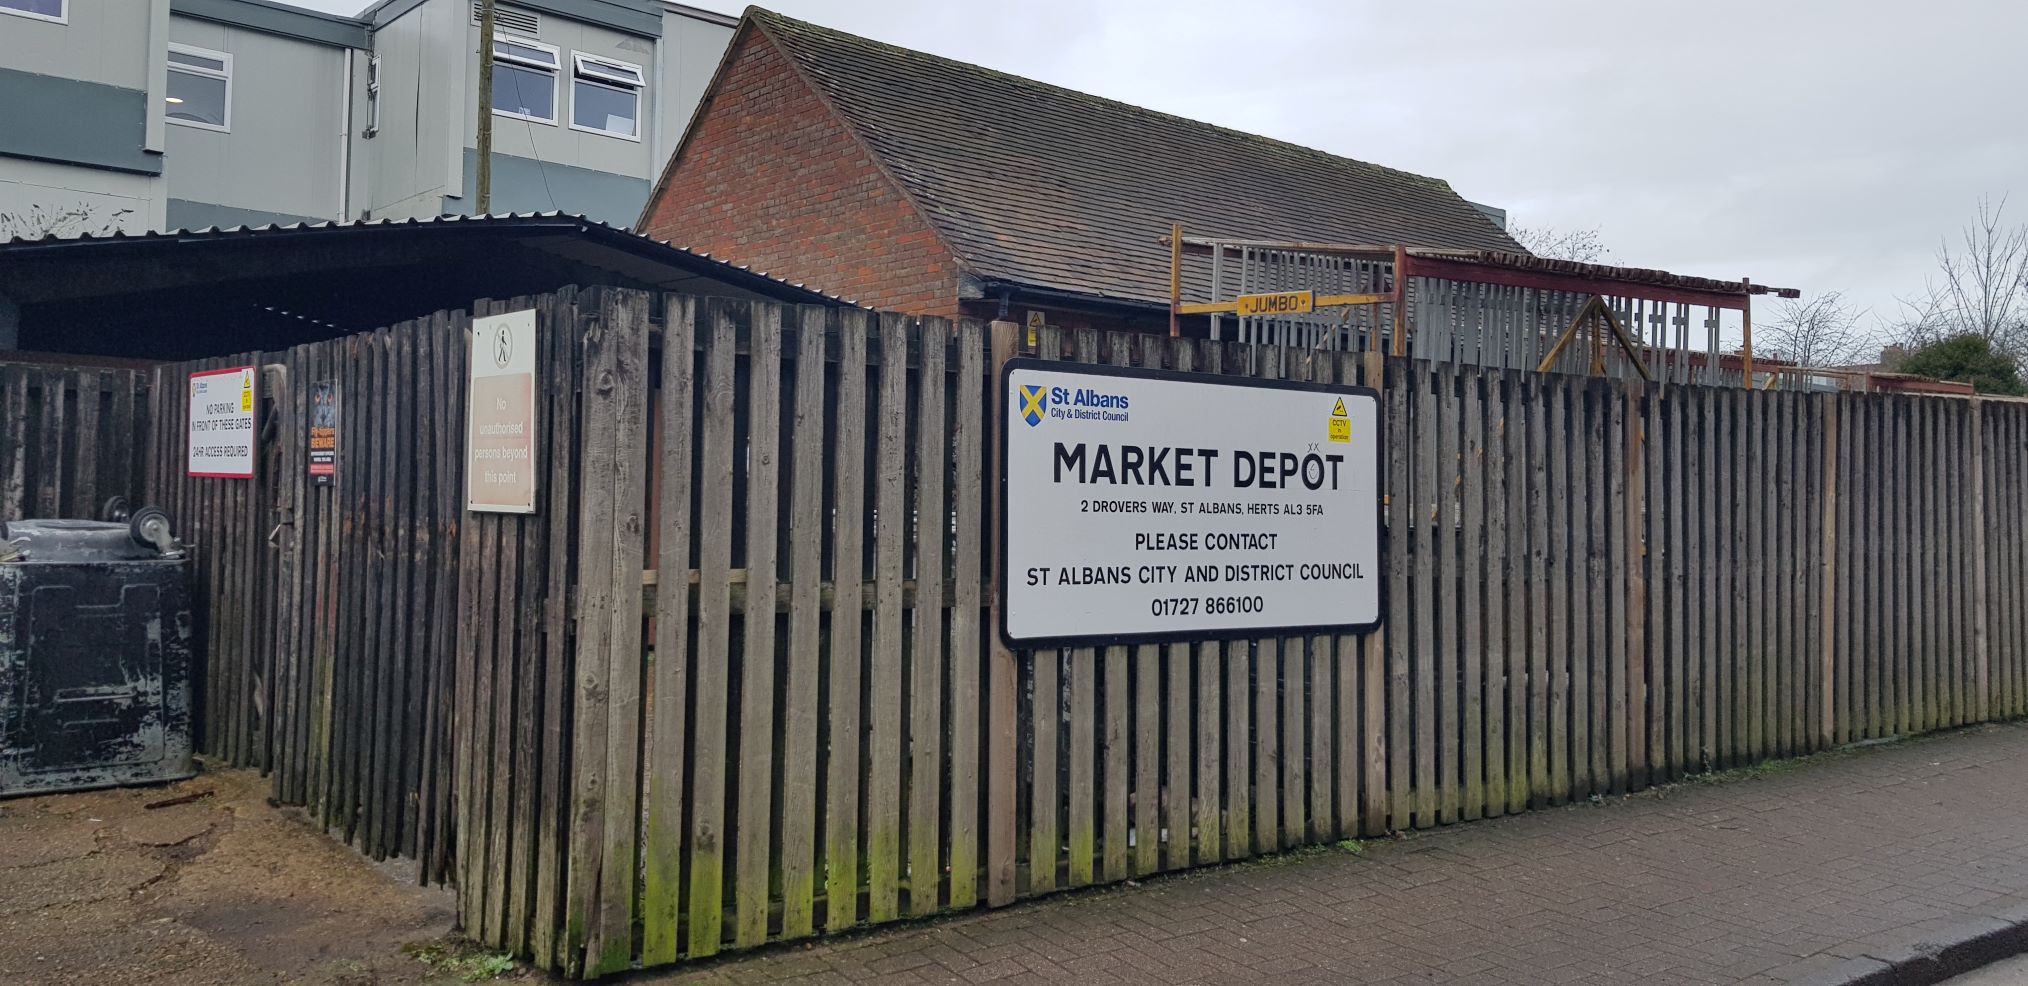 The market depot